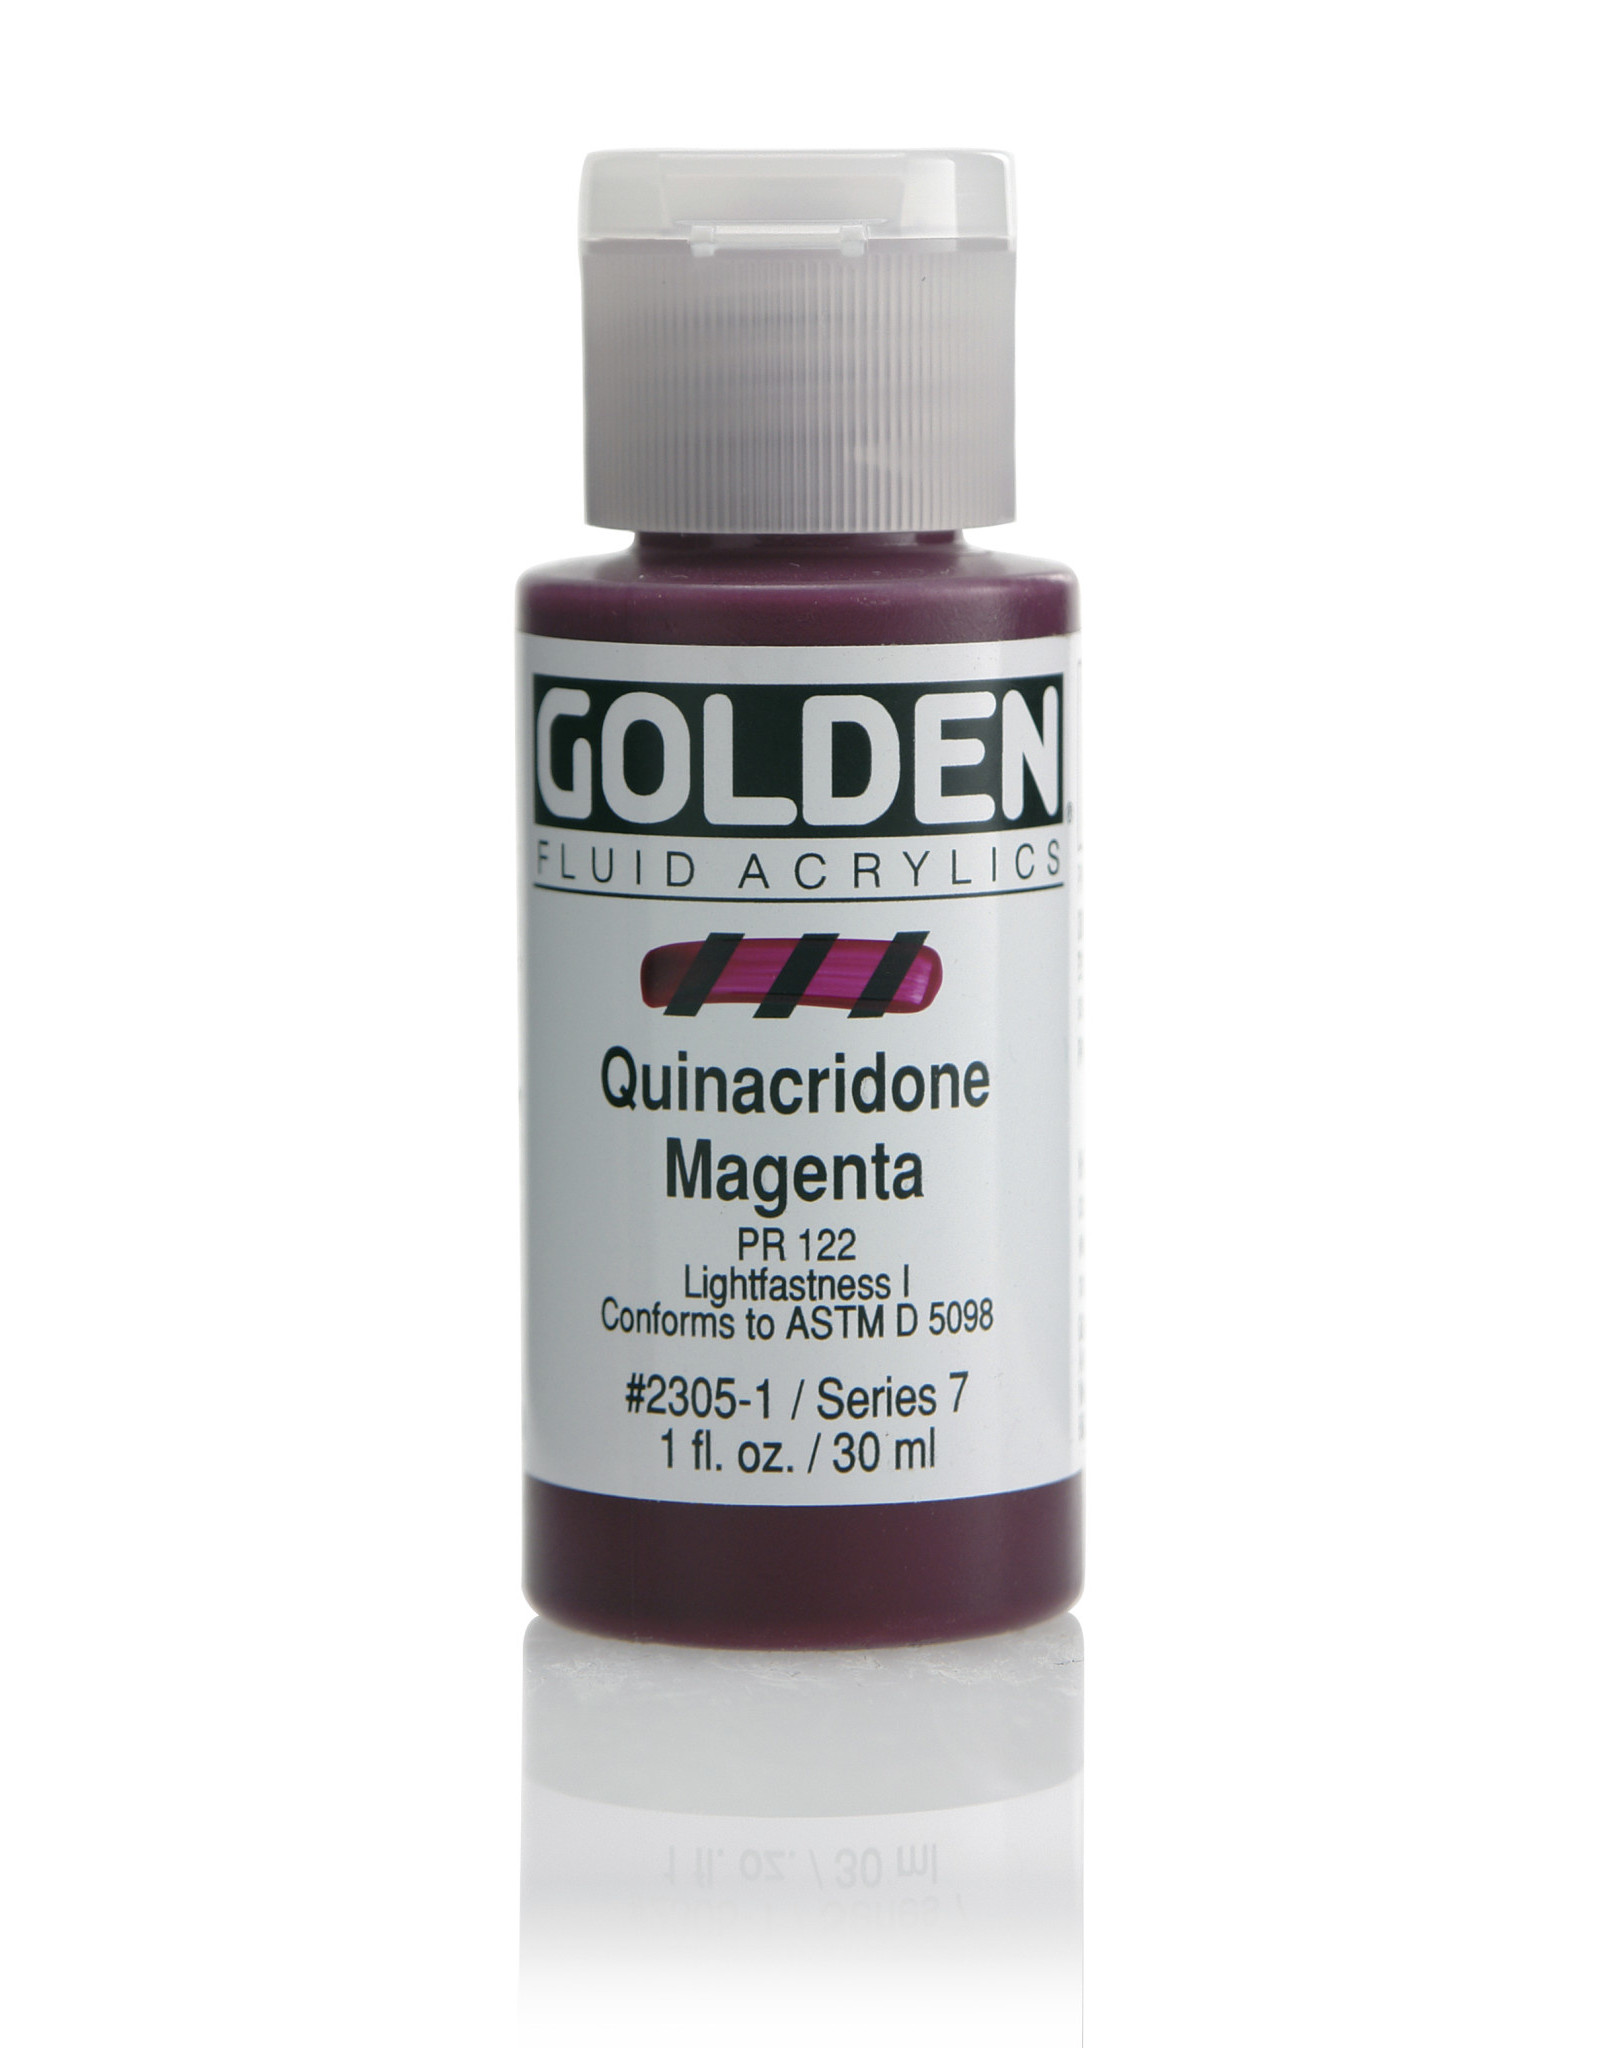 Golden Golden Fluid Acrylics, Quinacridone Magenta 1oz Cylinder